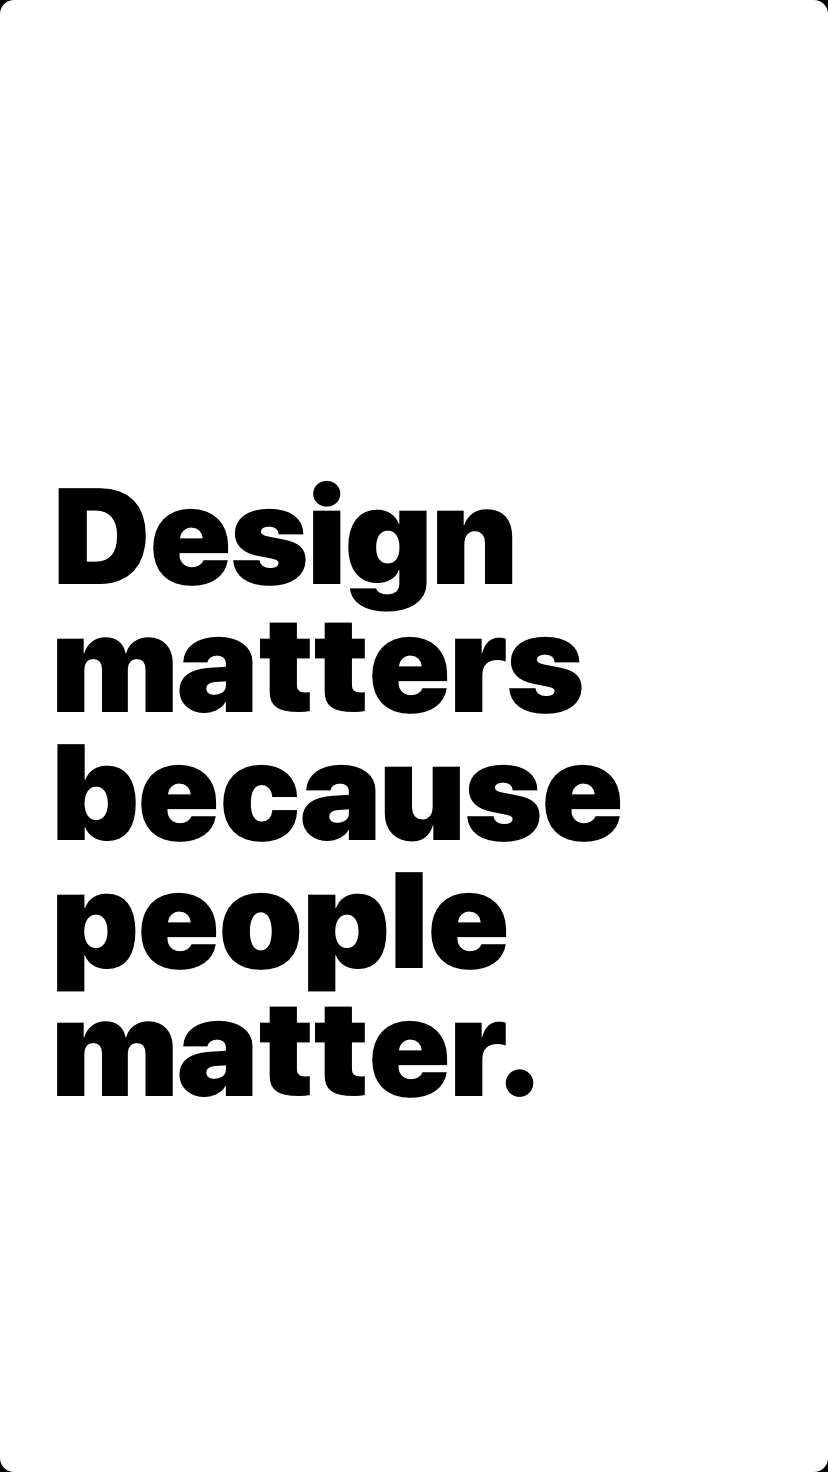 Design matters because people matter.